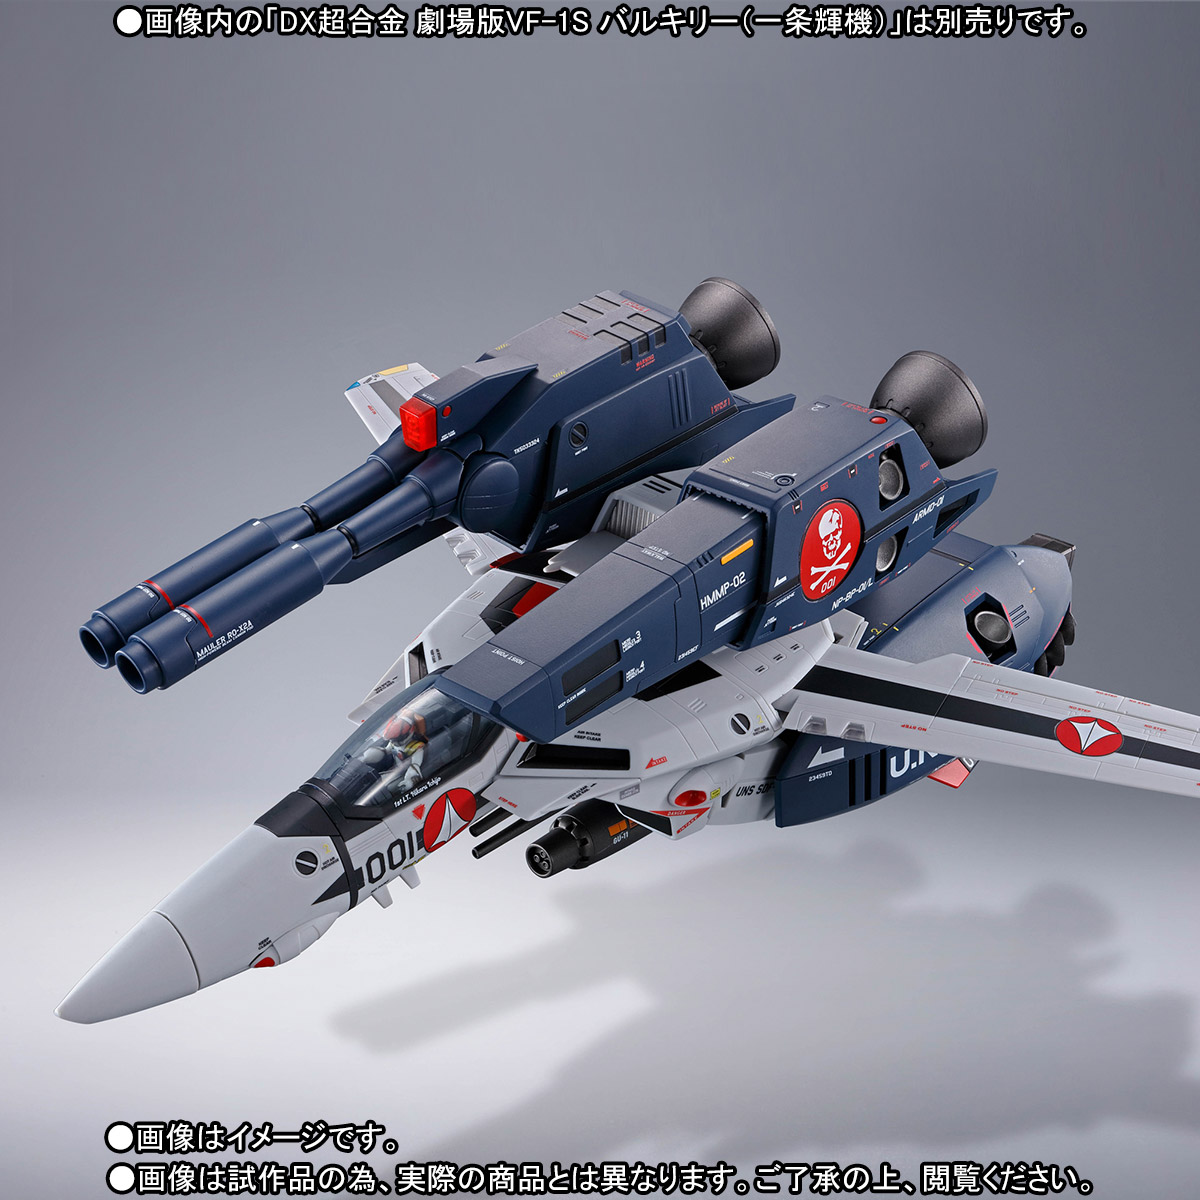 DX超合金 VF-1S バルキリー & ストライク／スーパーパーツセット